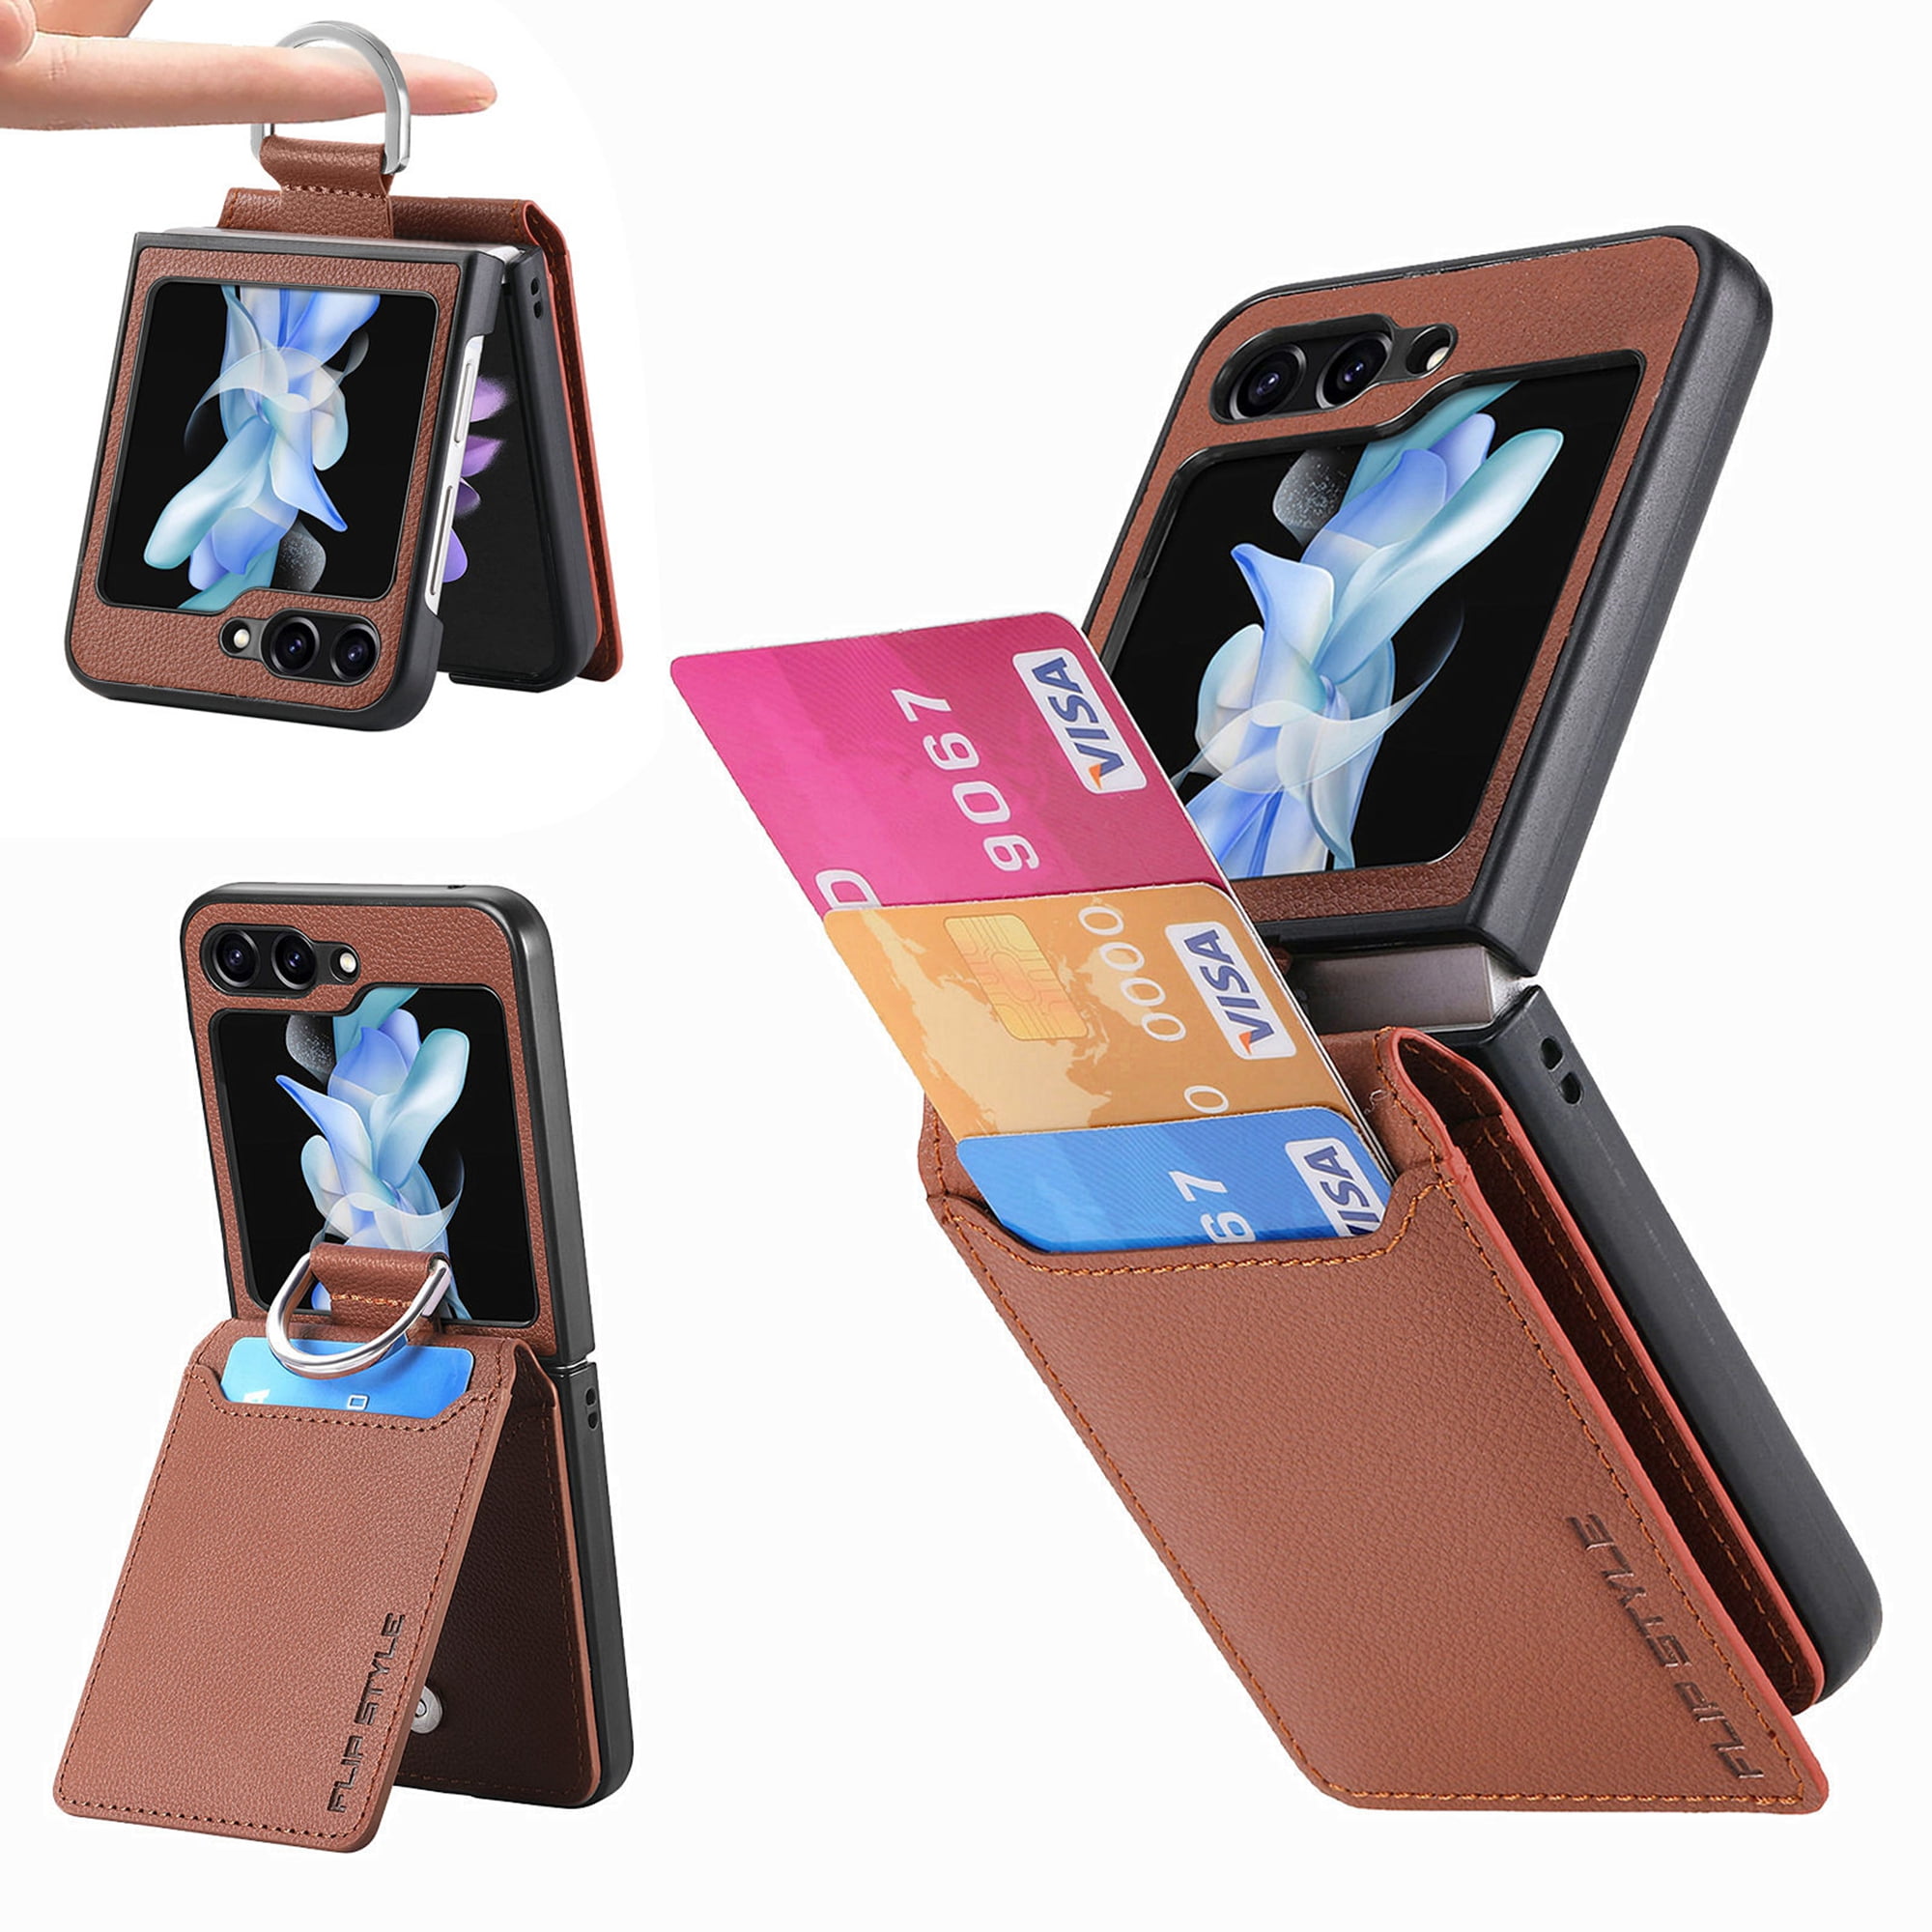 Z Flip5 Flip4 Leather Wallet Case For Samsung Galaxy Z Flip 5 4 3 5G Luxury  Card Holder Phone Bag Flip Book Cover Funda Etui - AliExpress